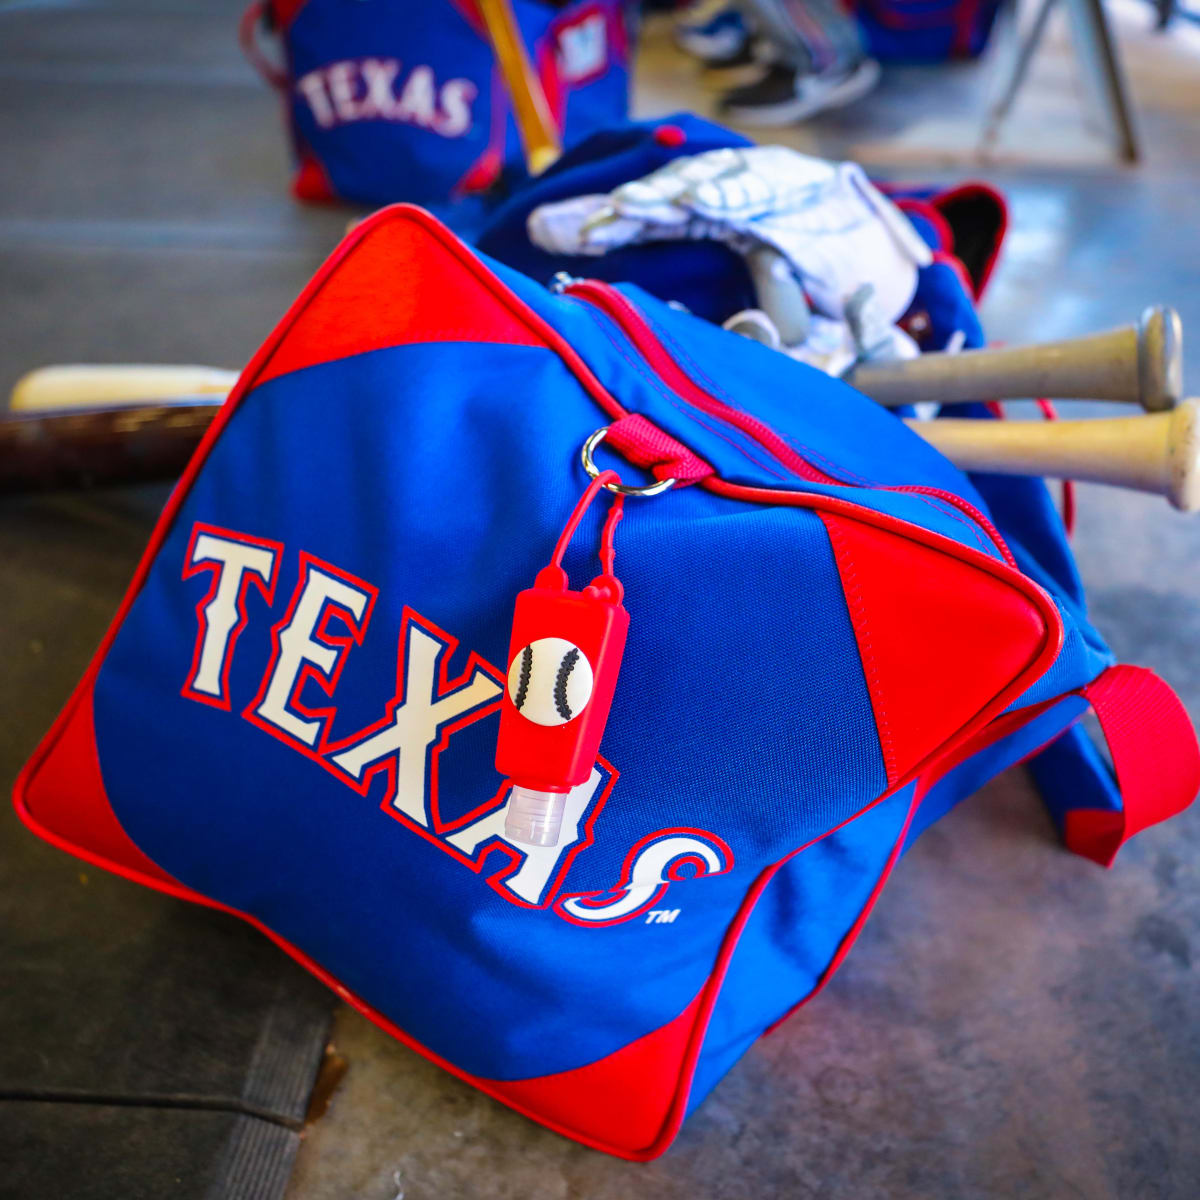 Enjoy some Texas Rangers coloring - Bally Sports Southwest